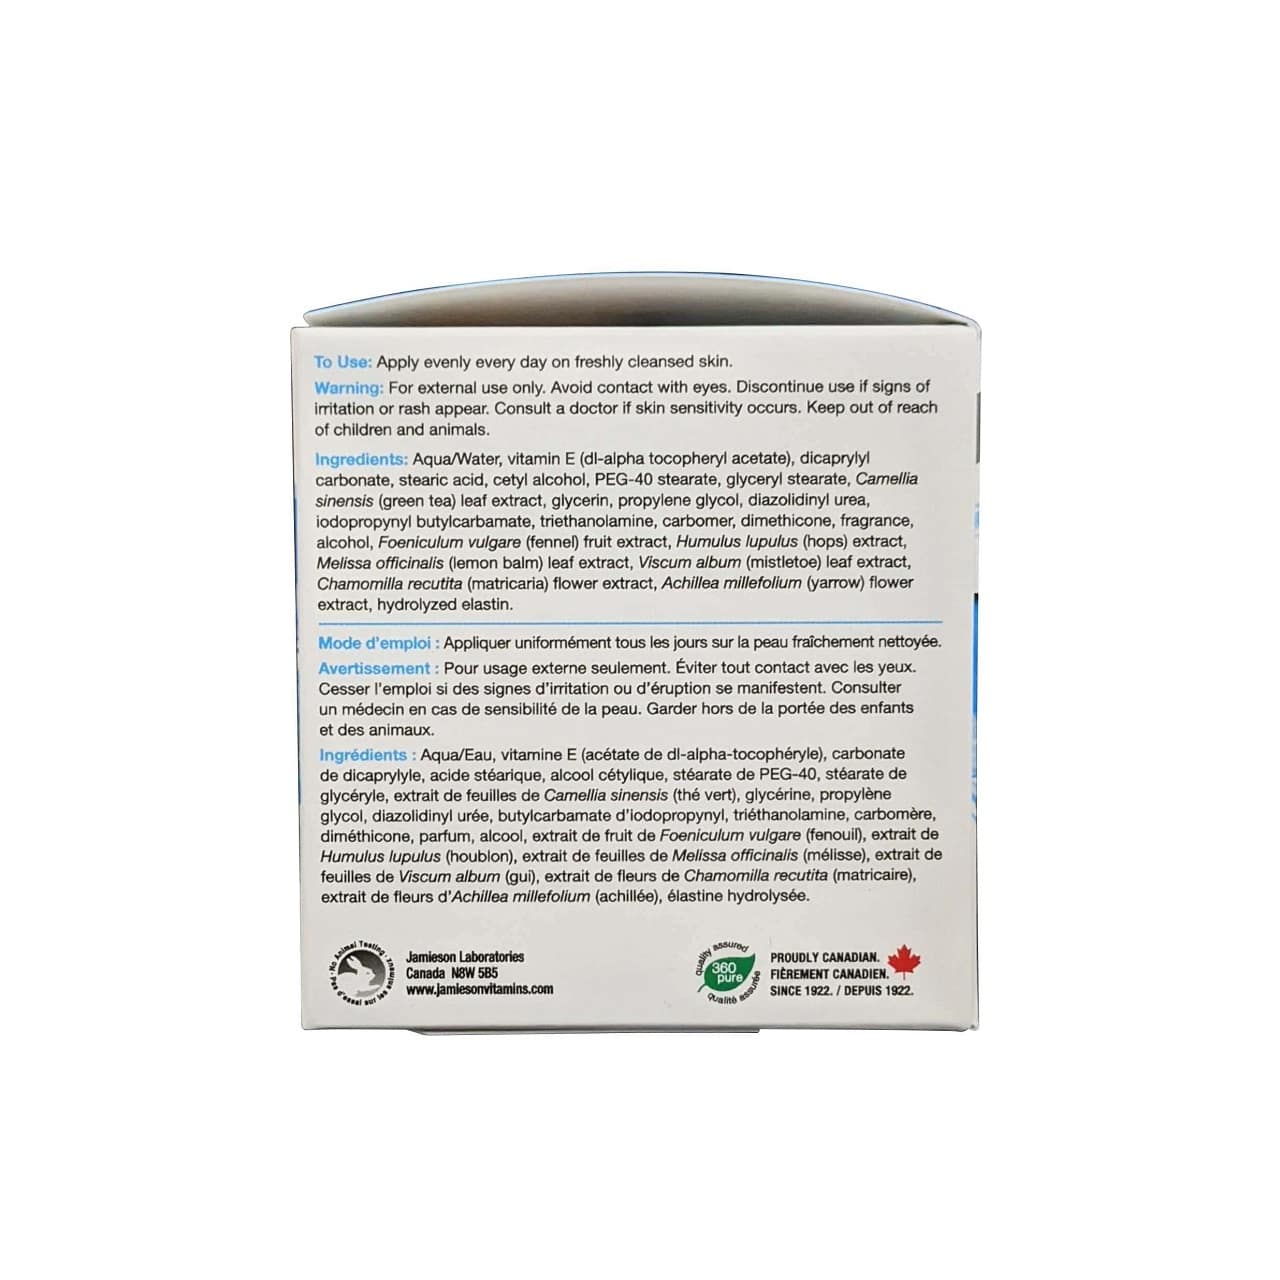 Uses, warnings, and ingredients for Jamieson ProVitamina Vitamin E Deep Nourishing Day Cream (120 mL)